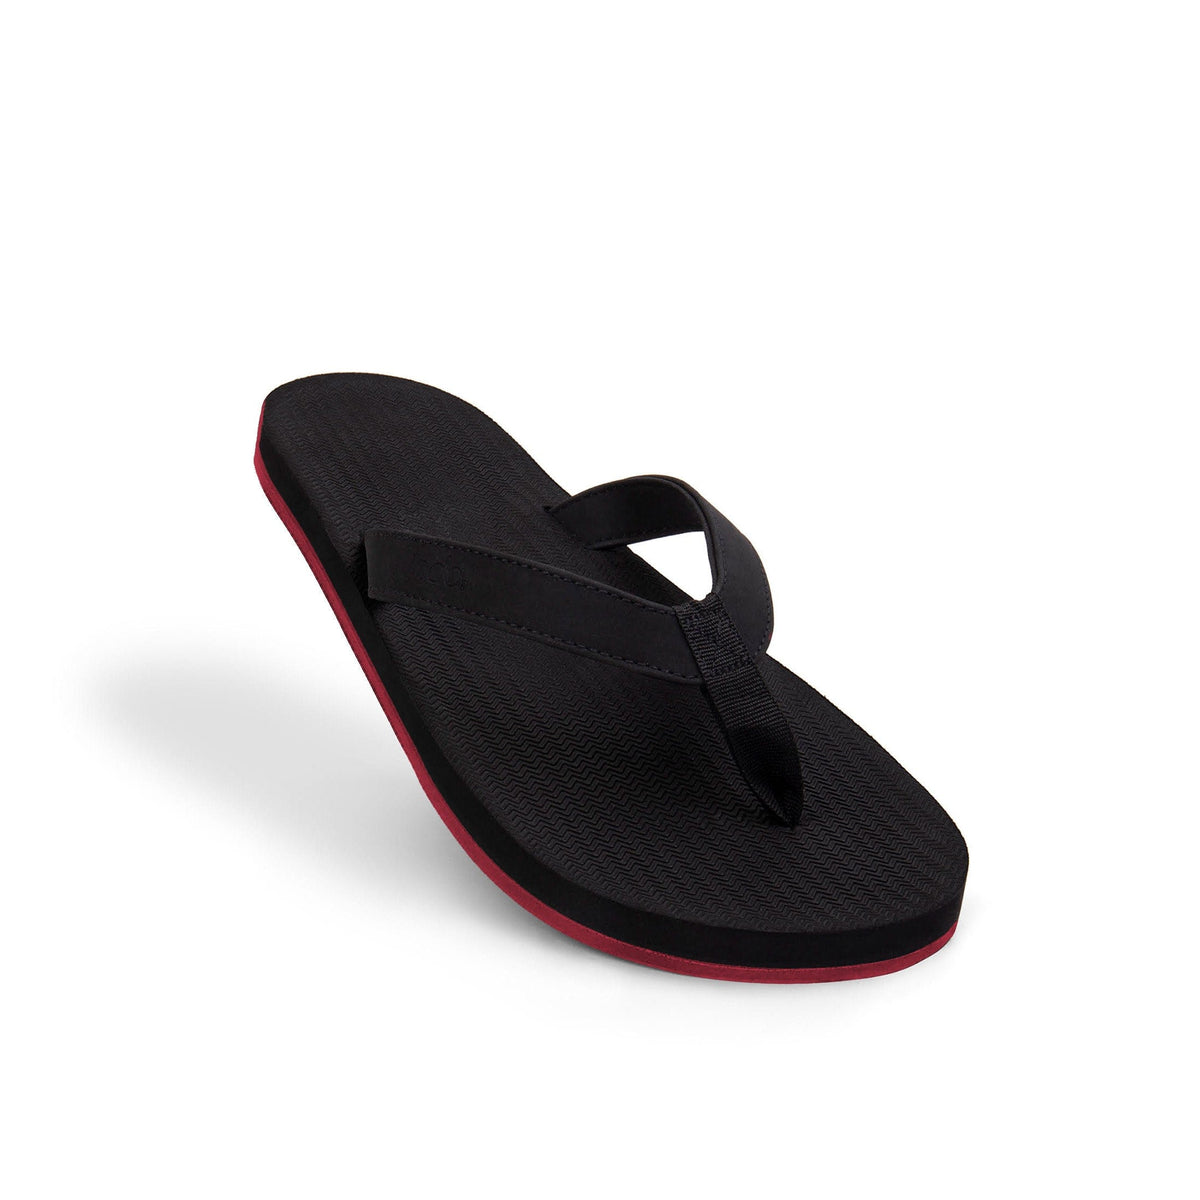 Indosole sandals